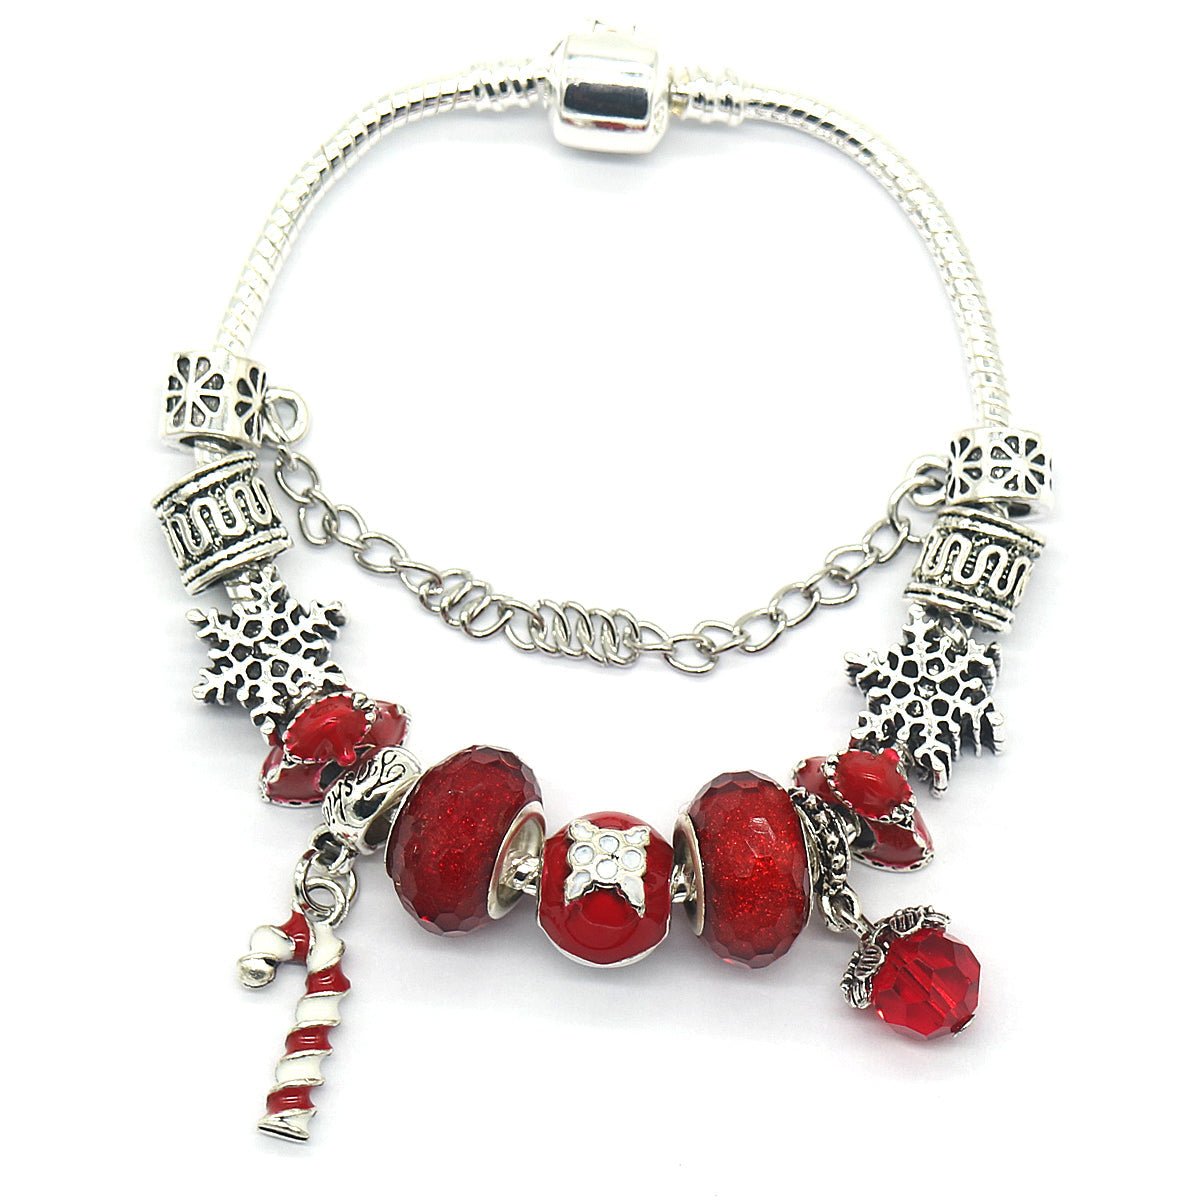 Murano and Swarovski Crystal Christmas Bracelet - Tuesday Morning-Charm Bracelets